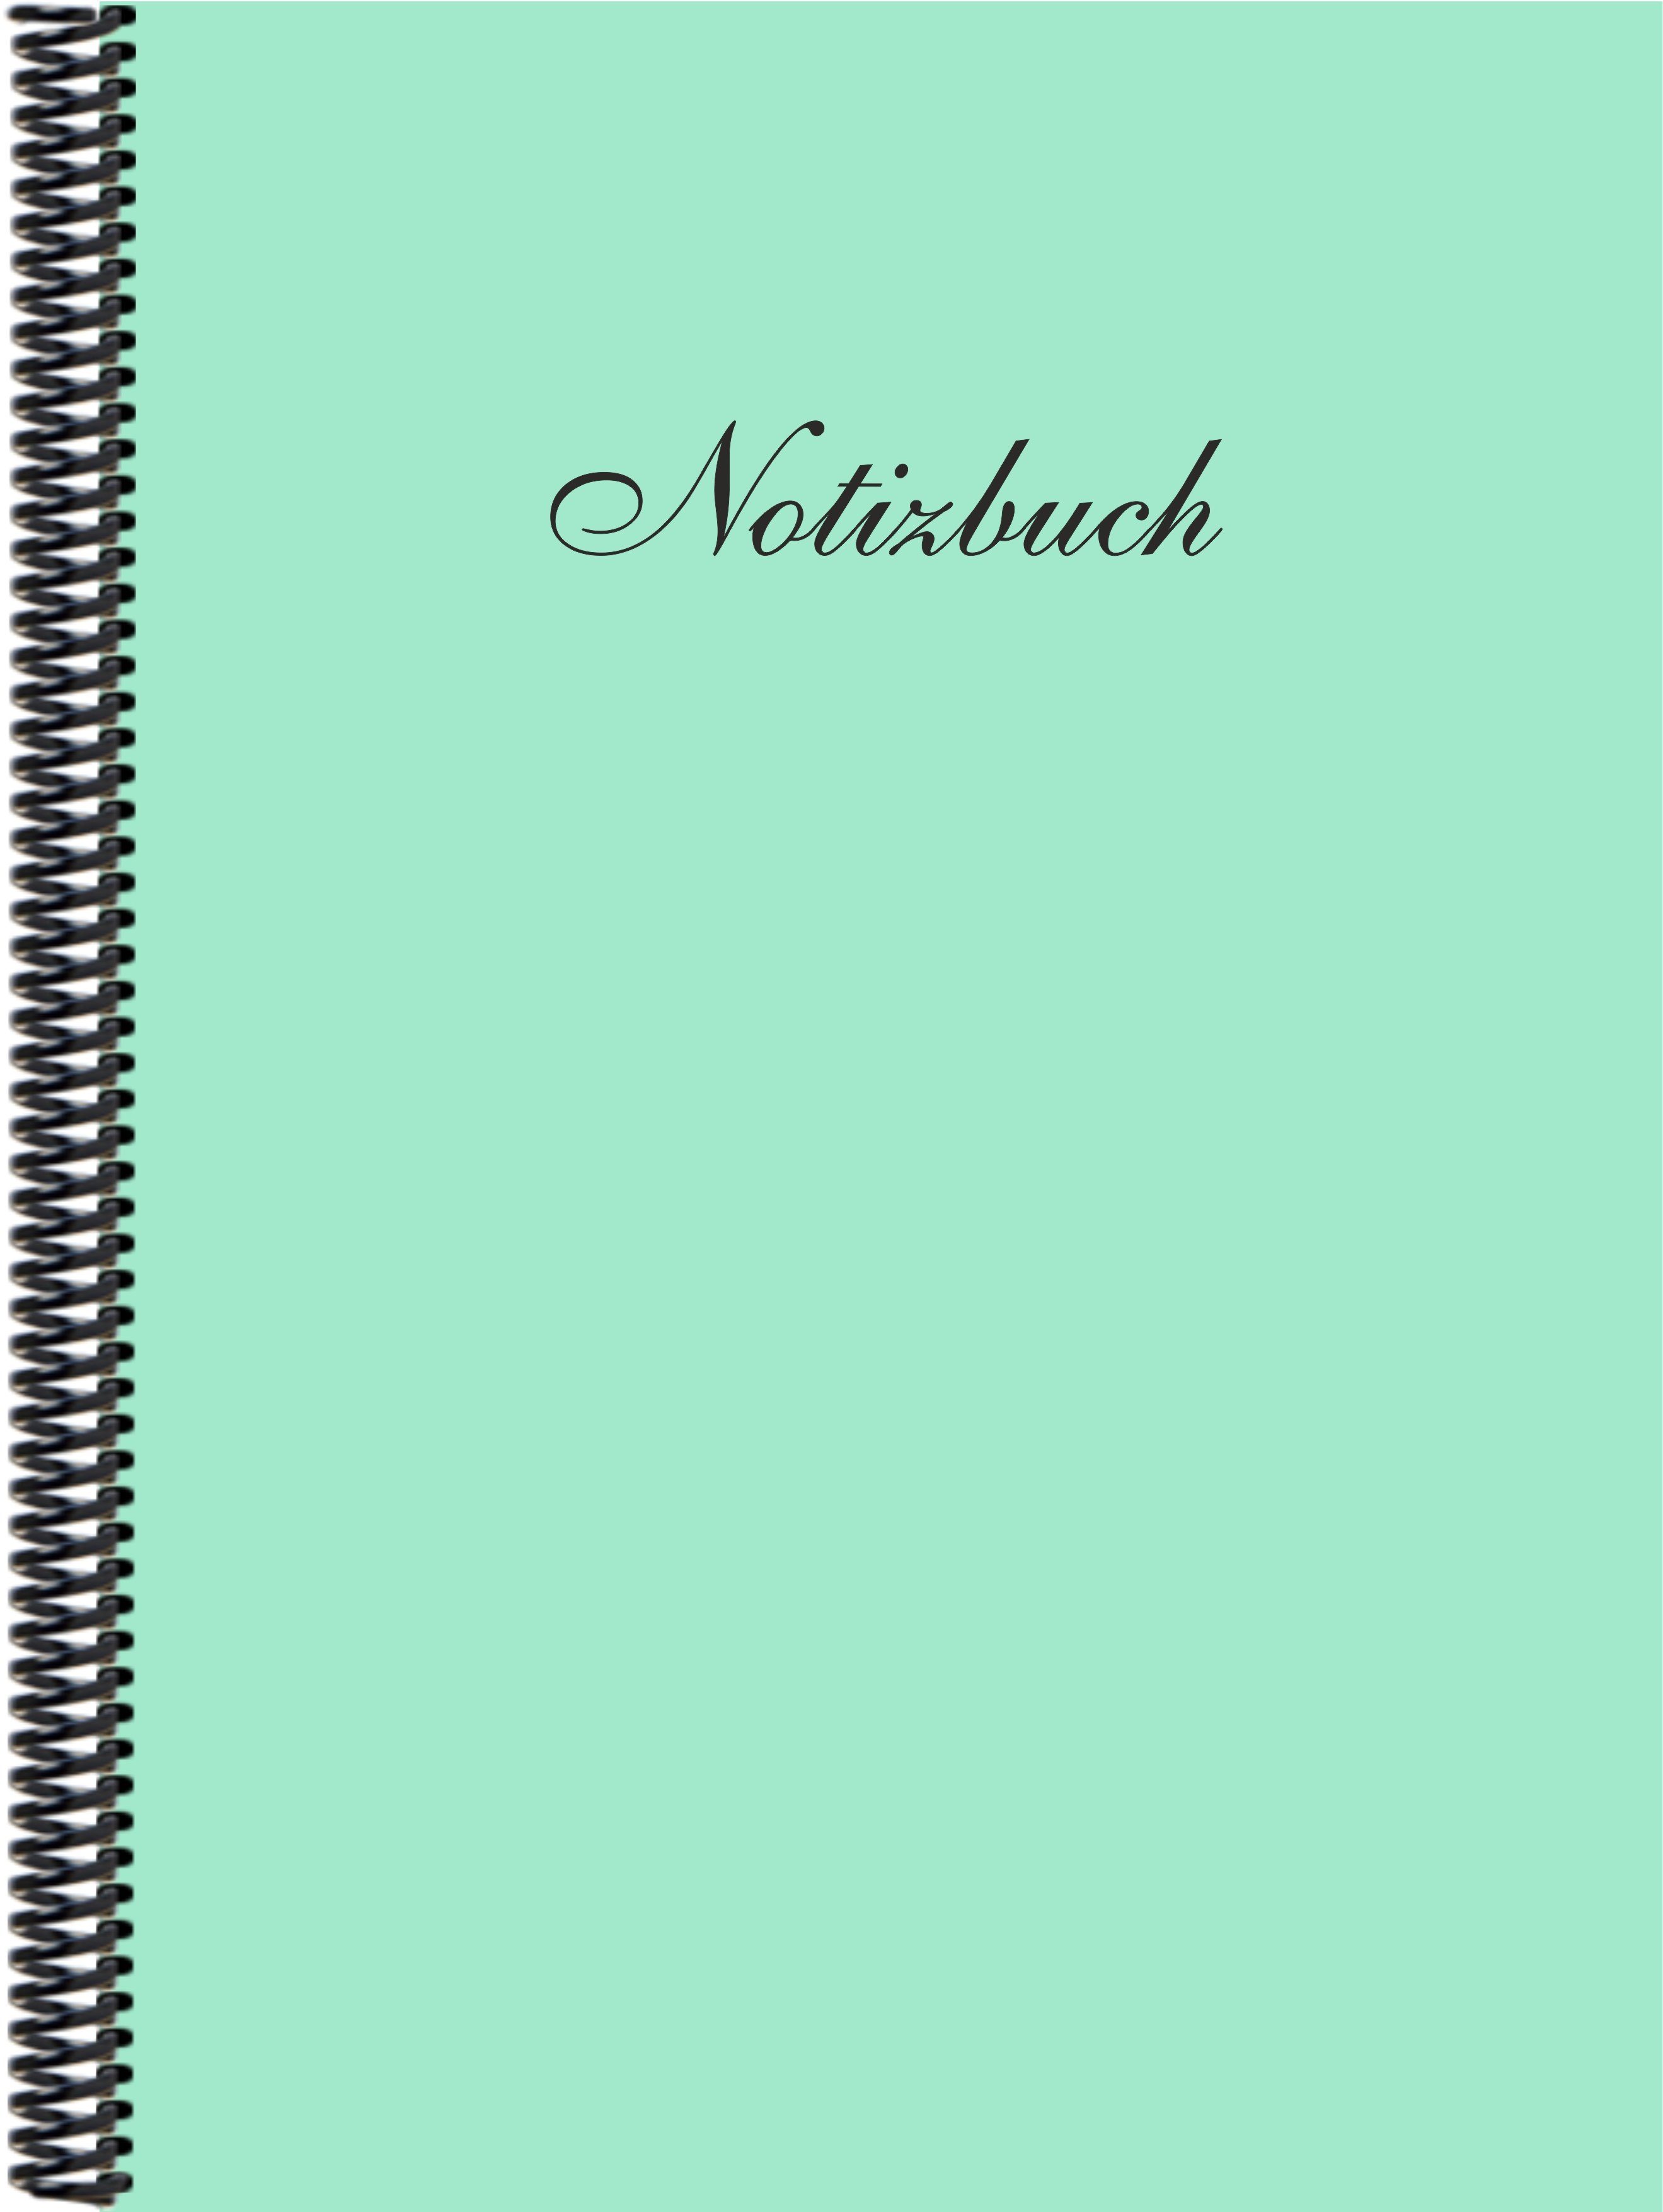 E&Z Notizbuch Gmbh Verlag mint Notizbuch blanko, DINA4 Trendfarbe der in